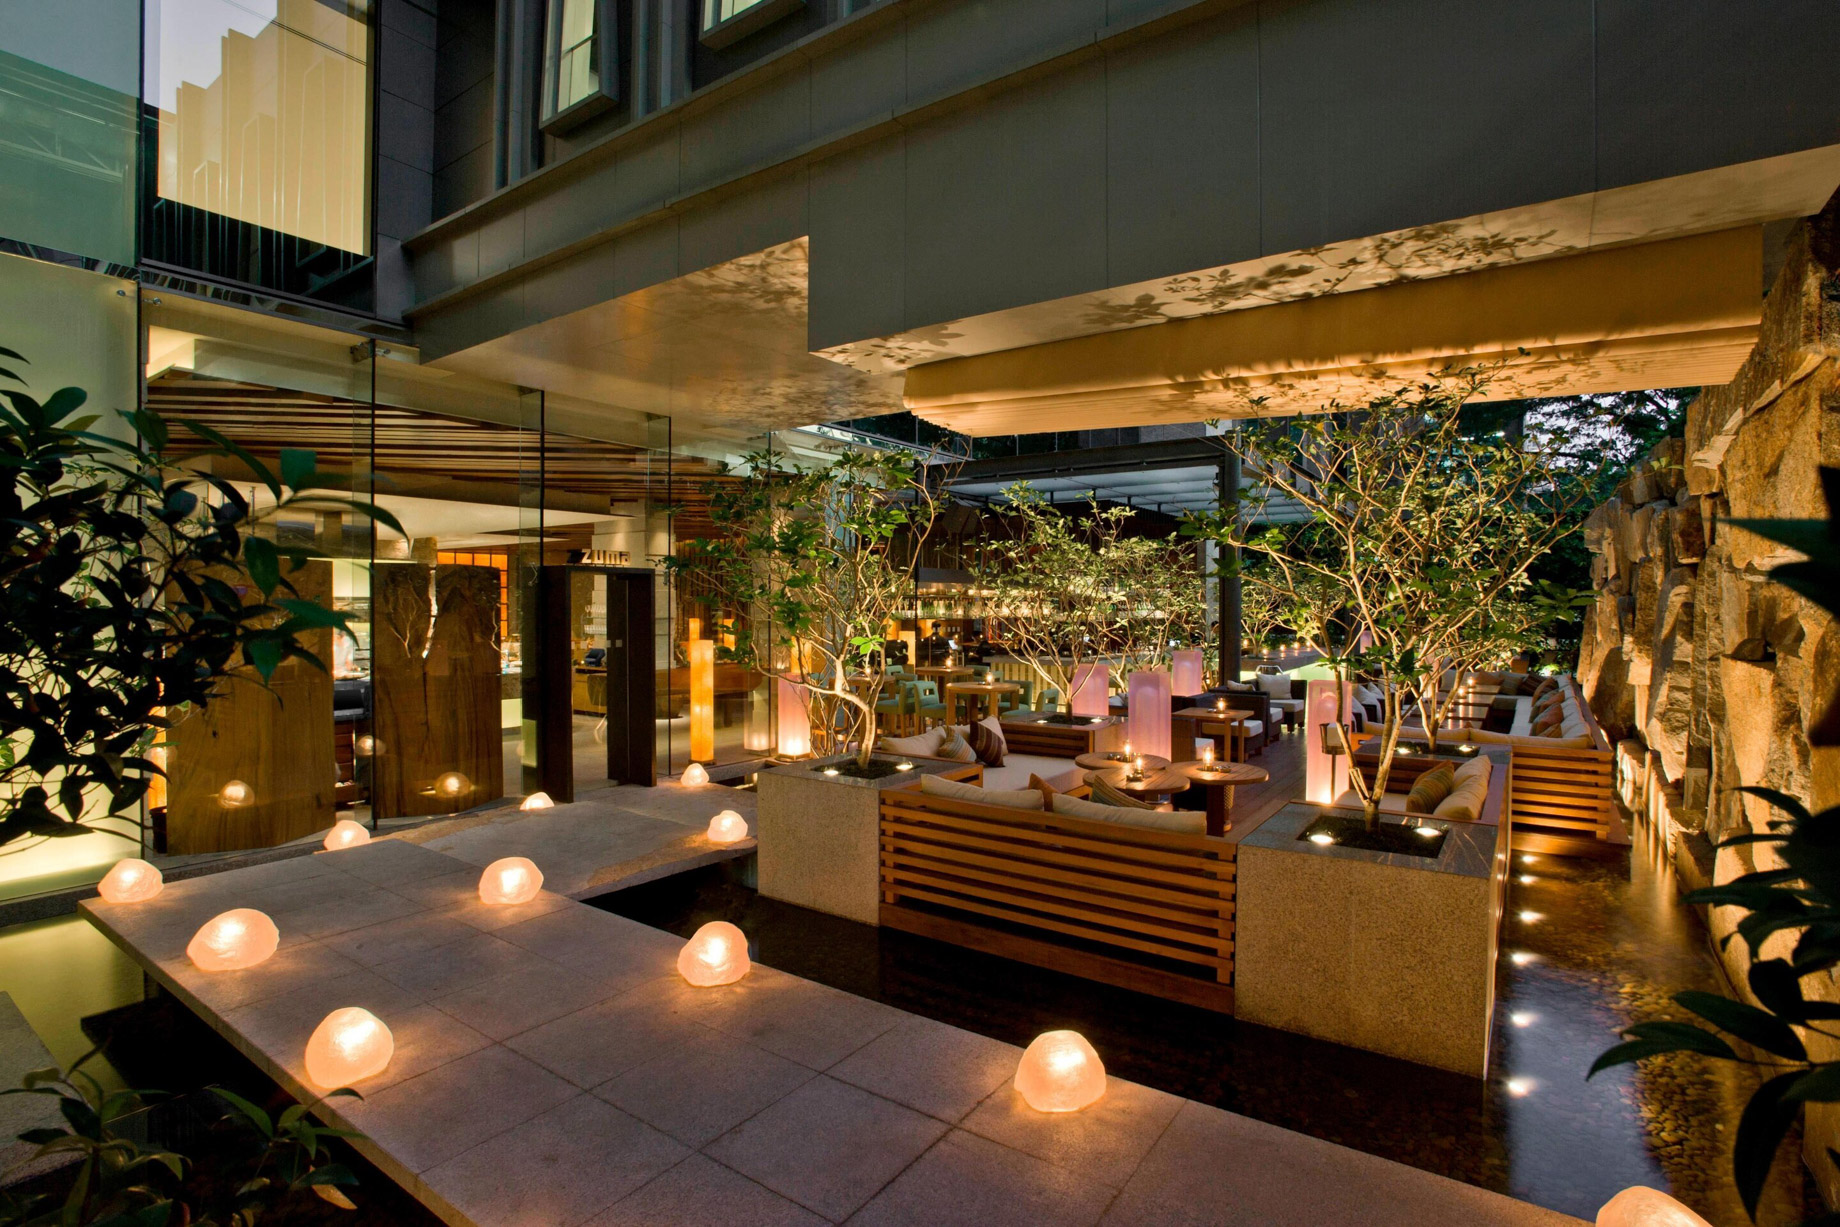 The St. Regis Bangkok Hotel - Bangkok, Thailand - Zuma Restaurant Terrace